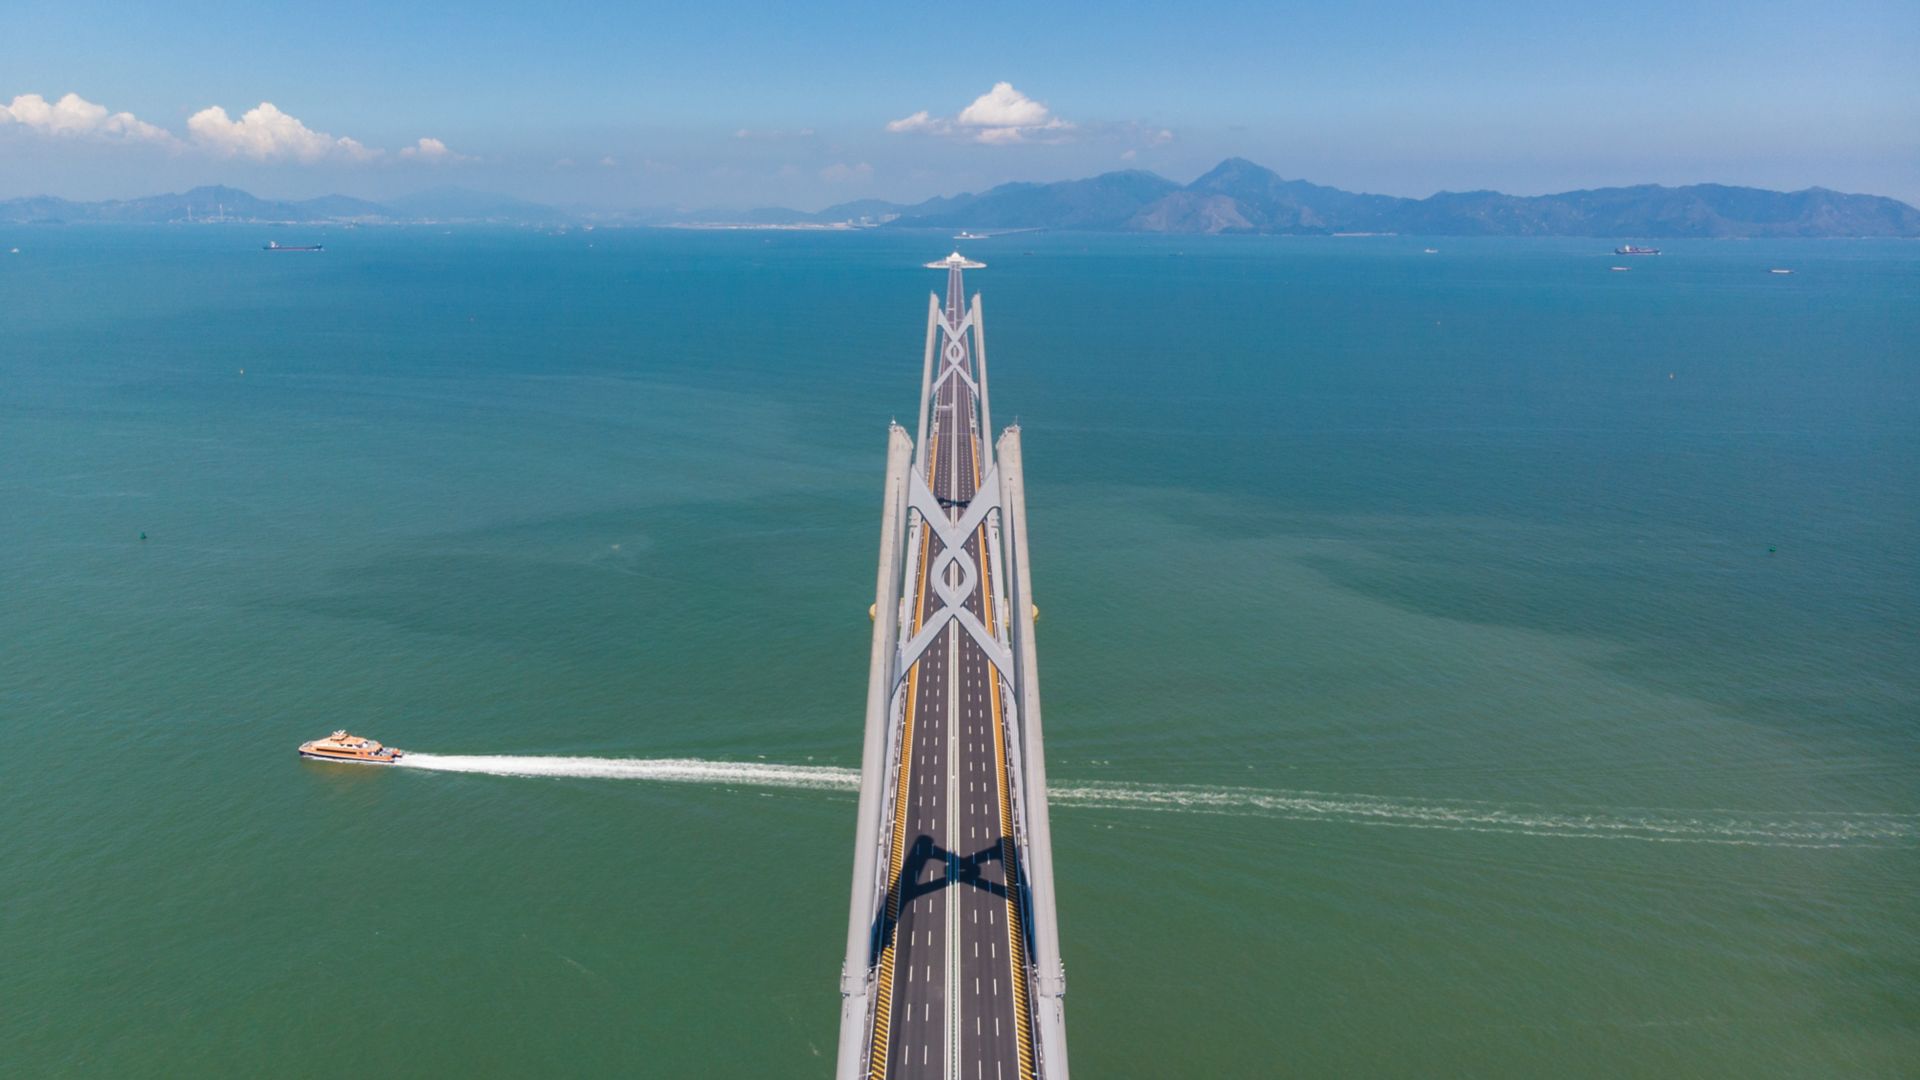 The Hong Kong-Zhuhai-Macao Bridge (HZMB) has broken many world records in engineering.